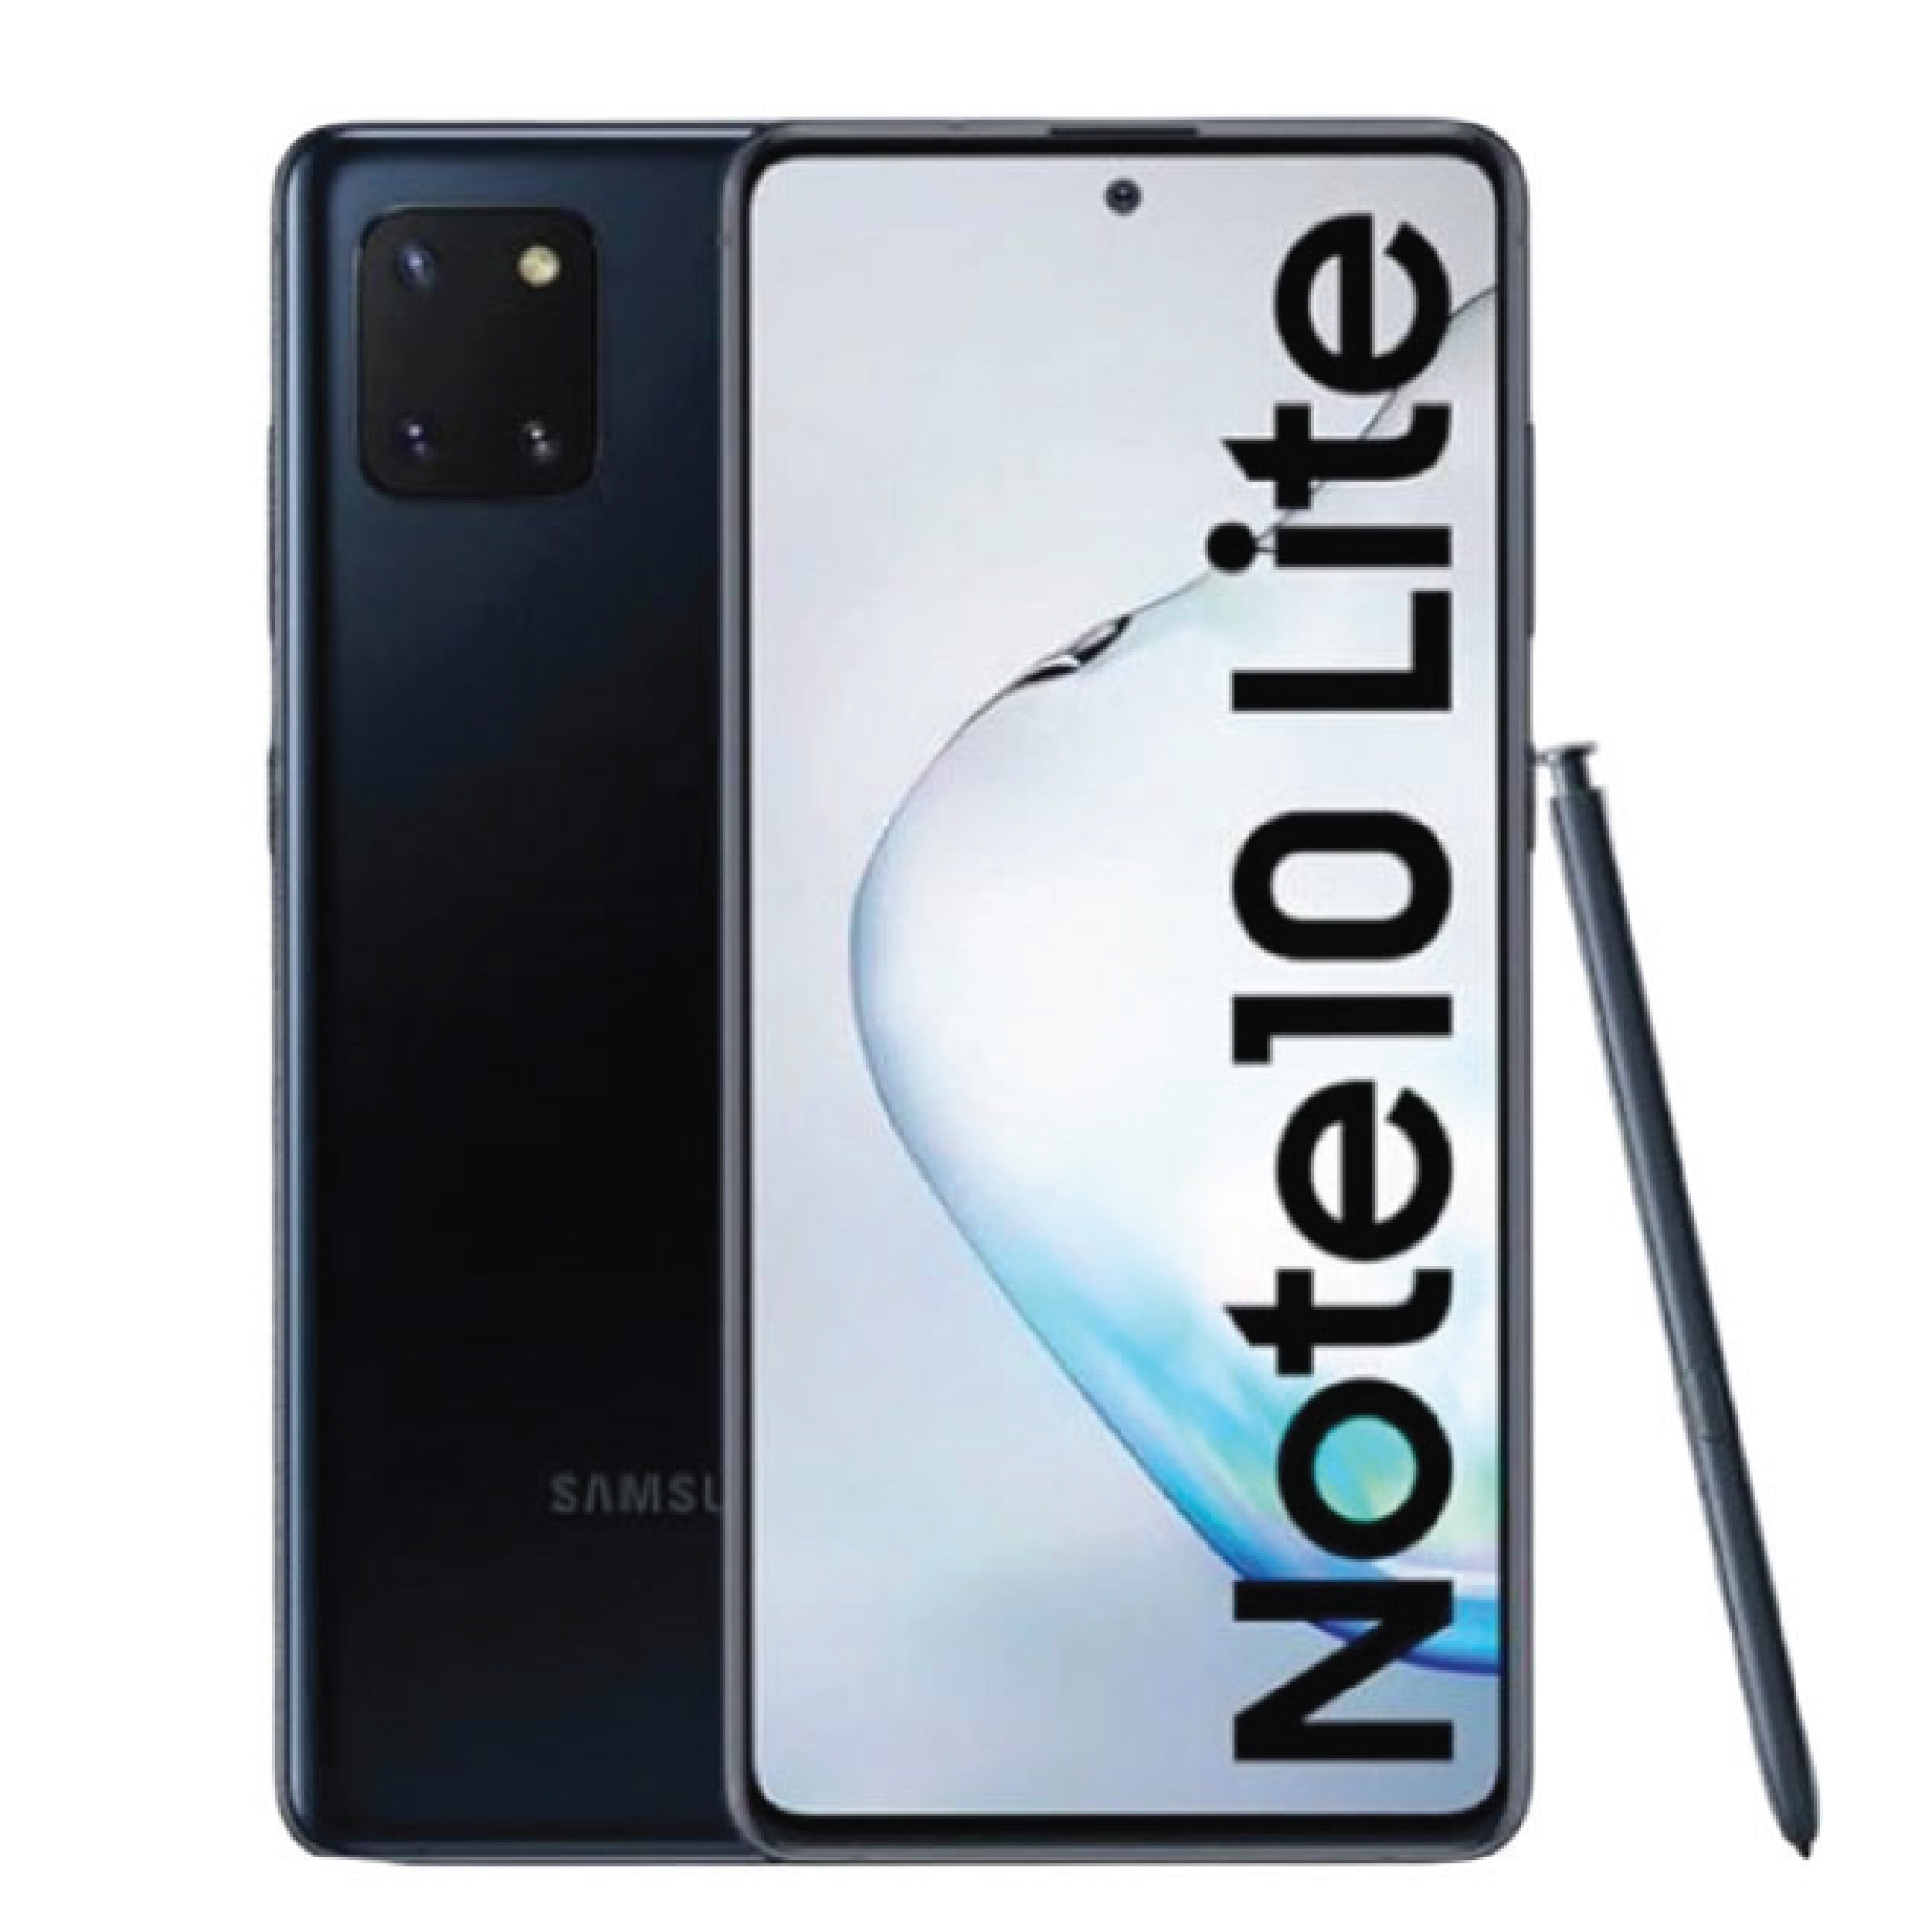 Samsung Galaxy Note 10 Lite, Out Of Stock @Price in Kenya - Price in Kenya